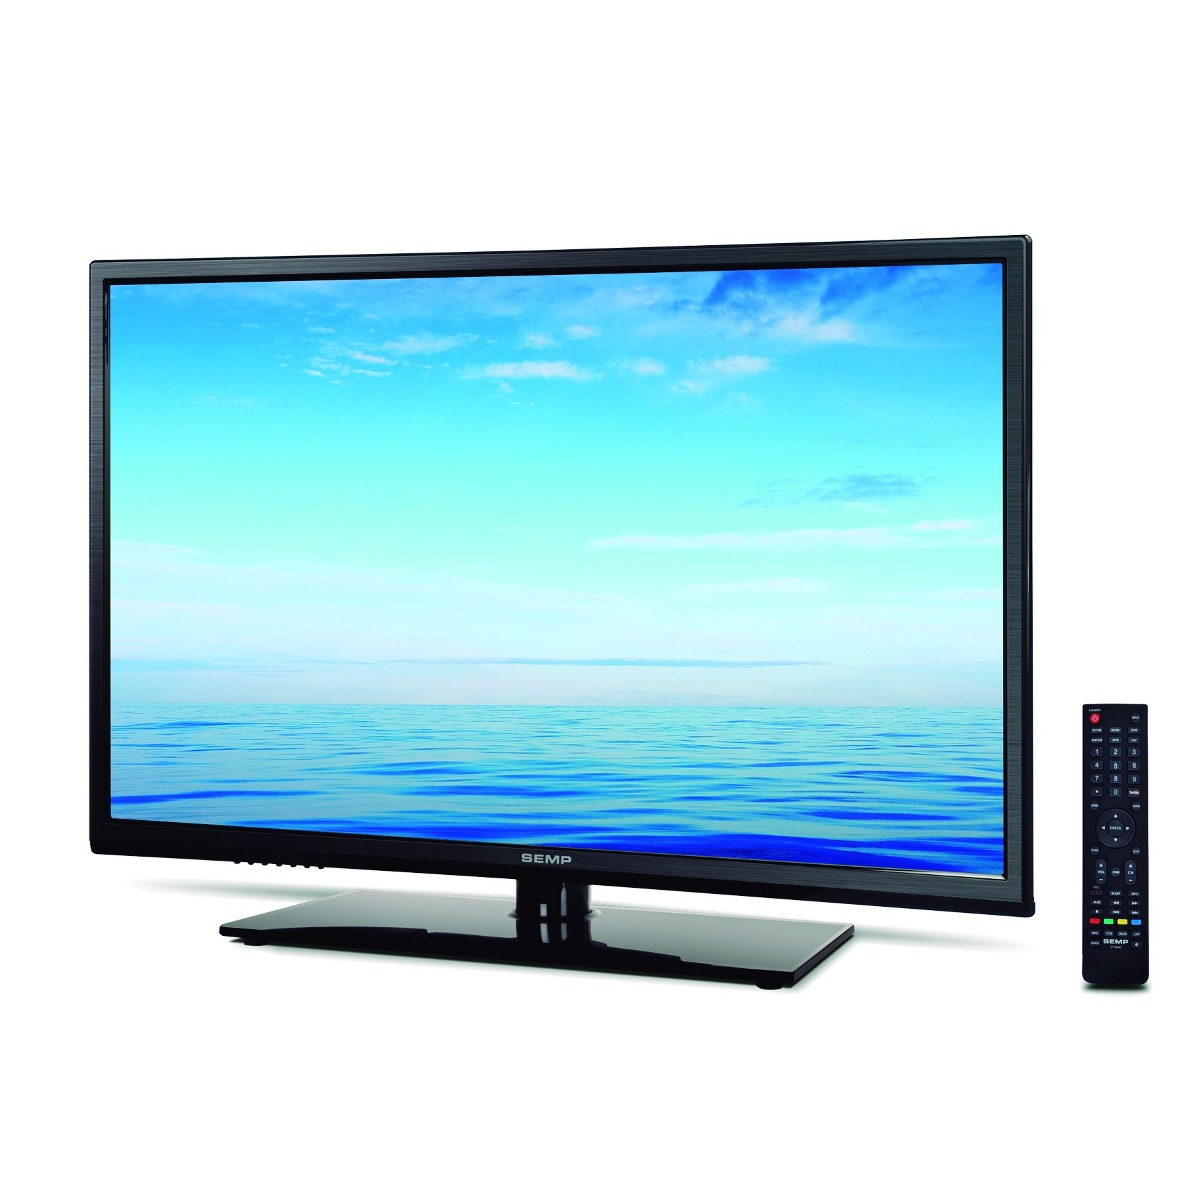  Tv Led 40  Full Hd Smart Lite Hdmi Dl 4077i Semp Toshiba 